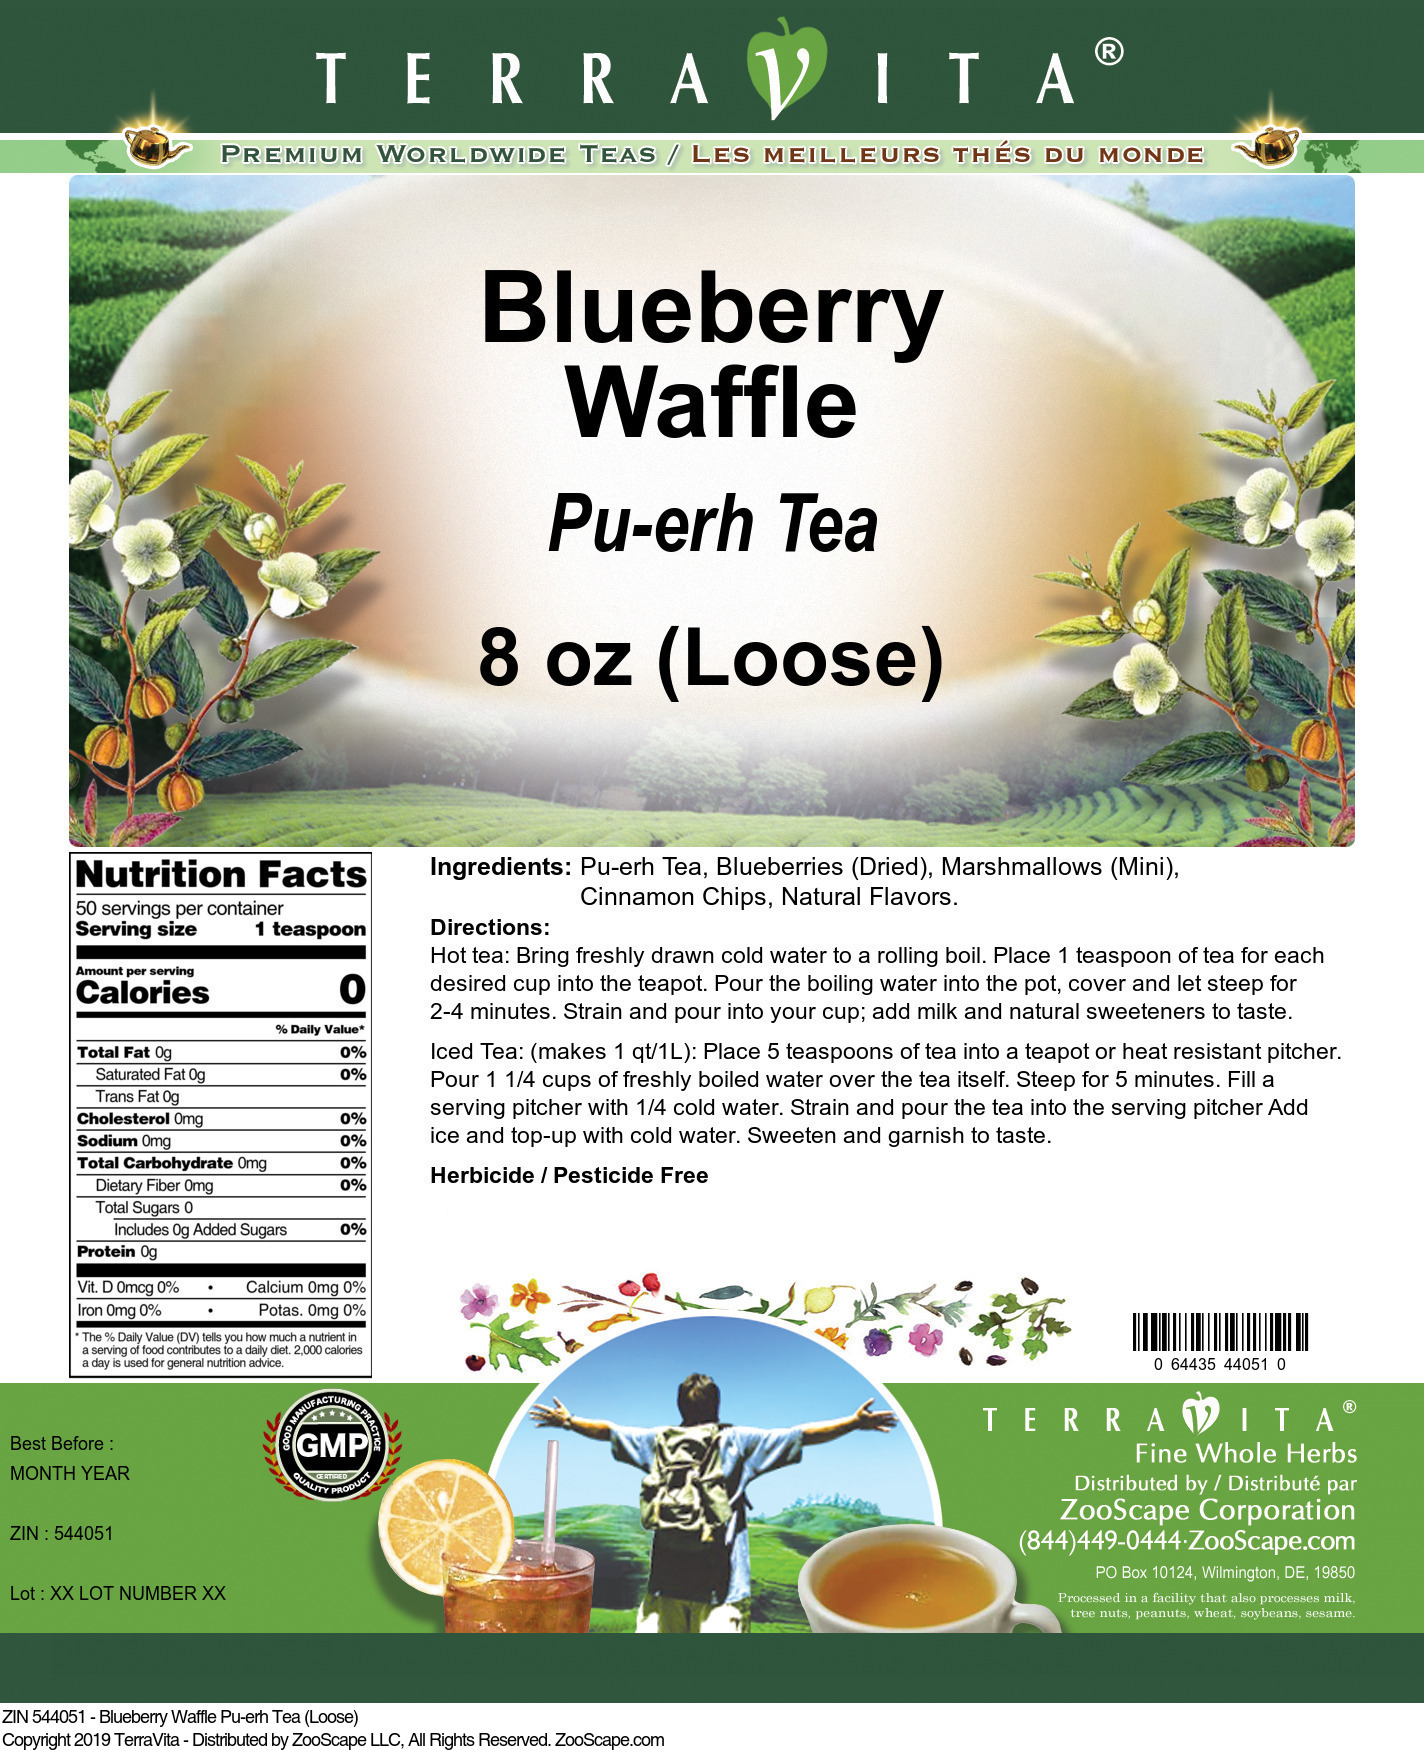 Blueberry Waffle Pu-erh Tea (Loose) - Label